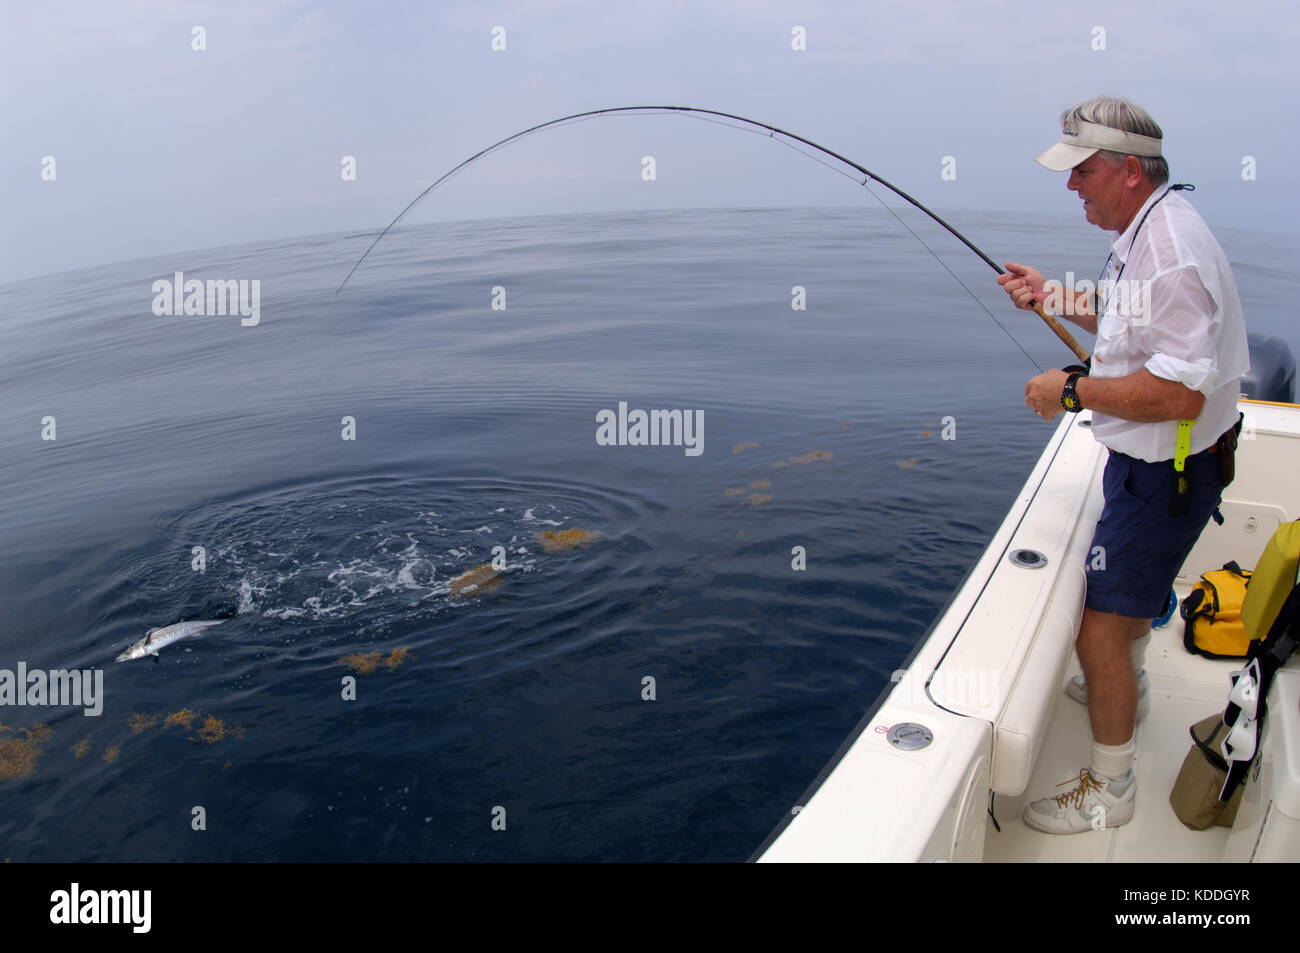 Un pescador con un carite o caballa capturados mientras que la pesca con mosca offshore de Freeport, Texas Foto de stock